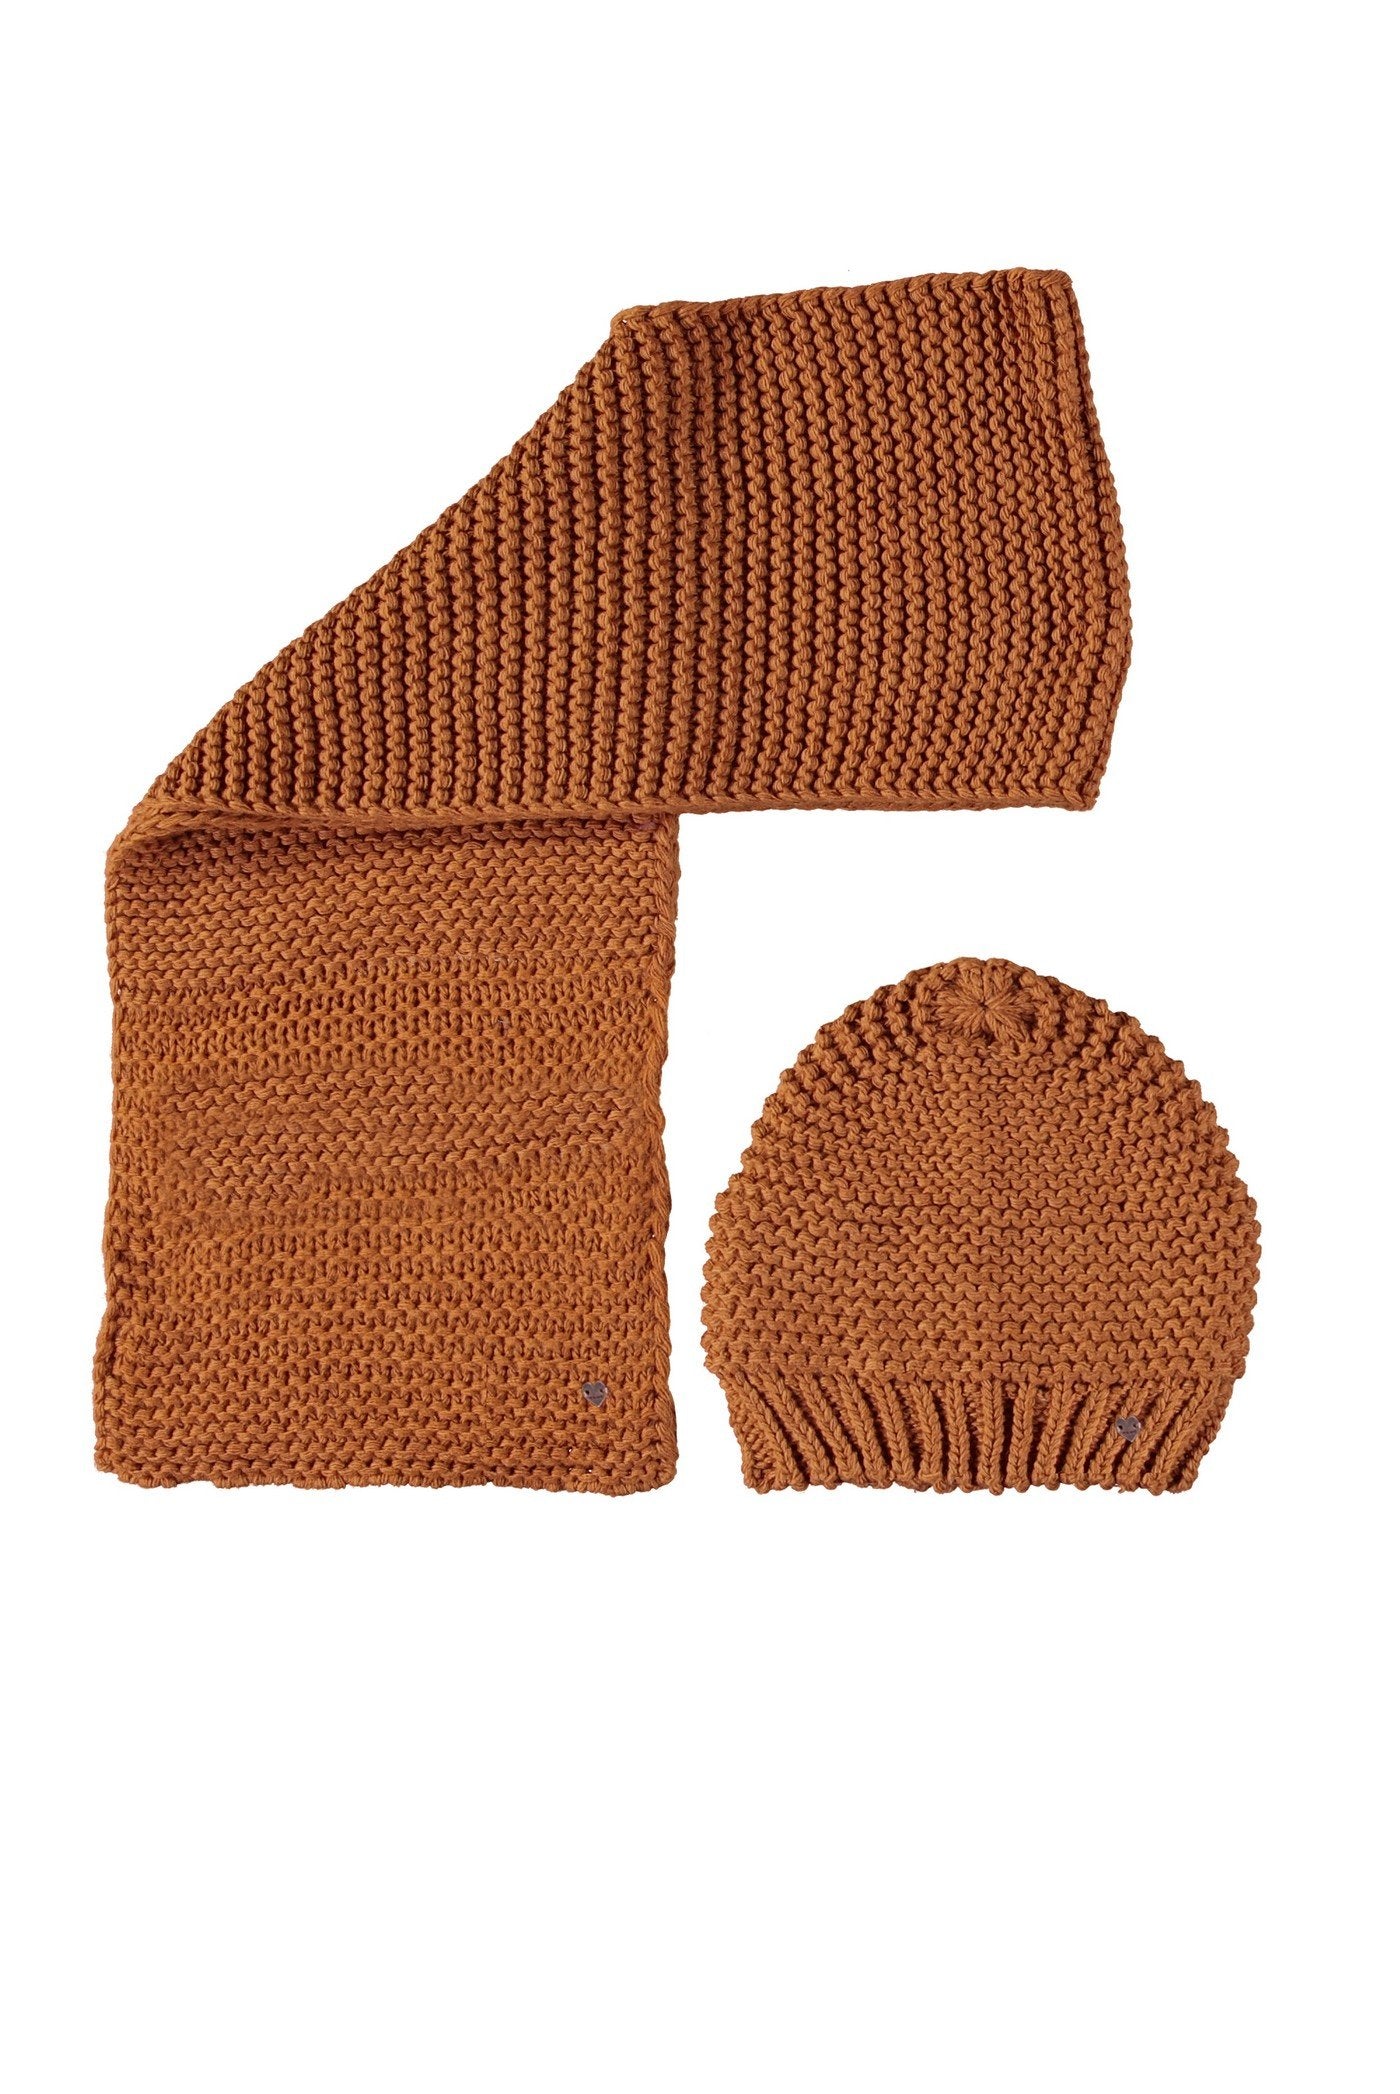 Meisjes Rai knitted scarf and hat set van NoNo in de kleur Chestnut in maat 92-104.